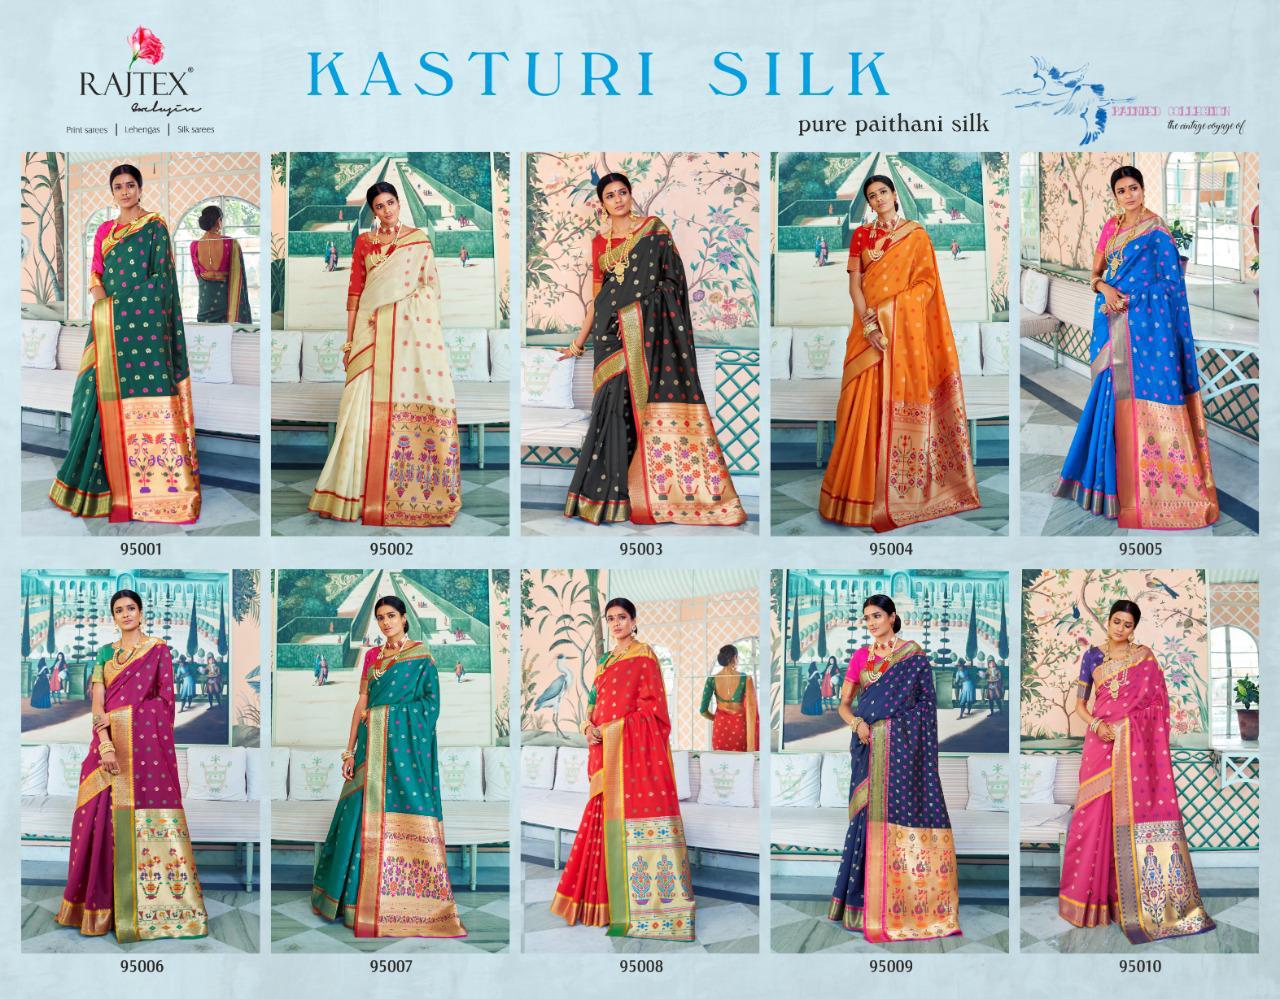 Rajtex Kasturi Silk 95001-95010